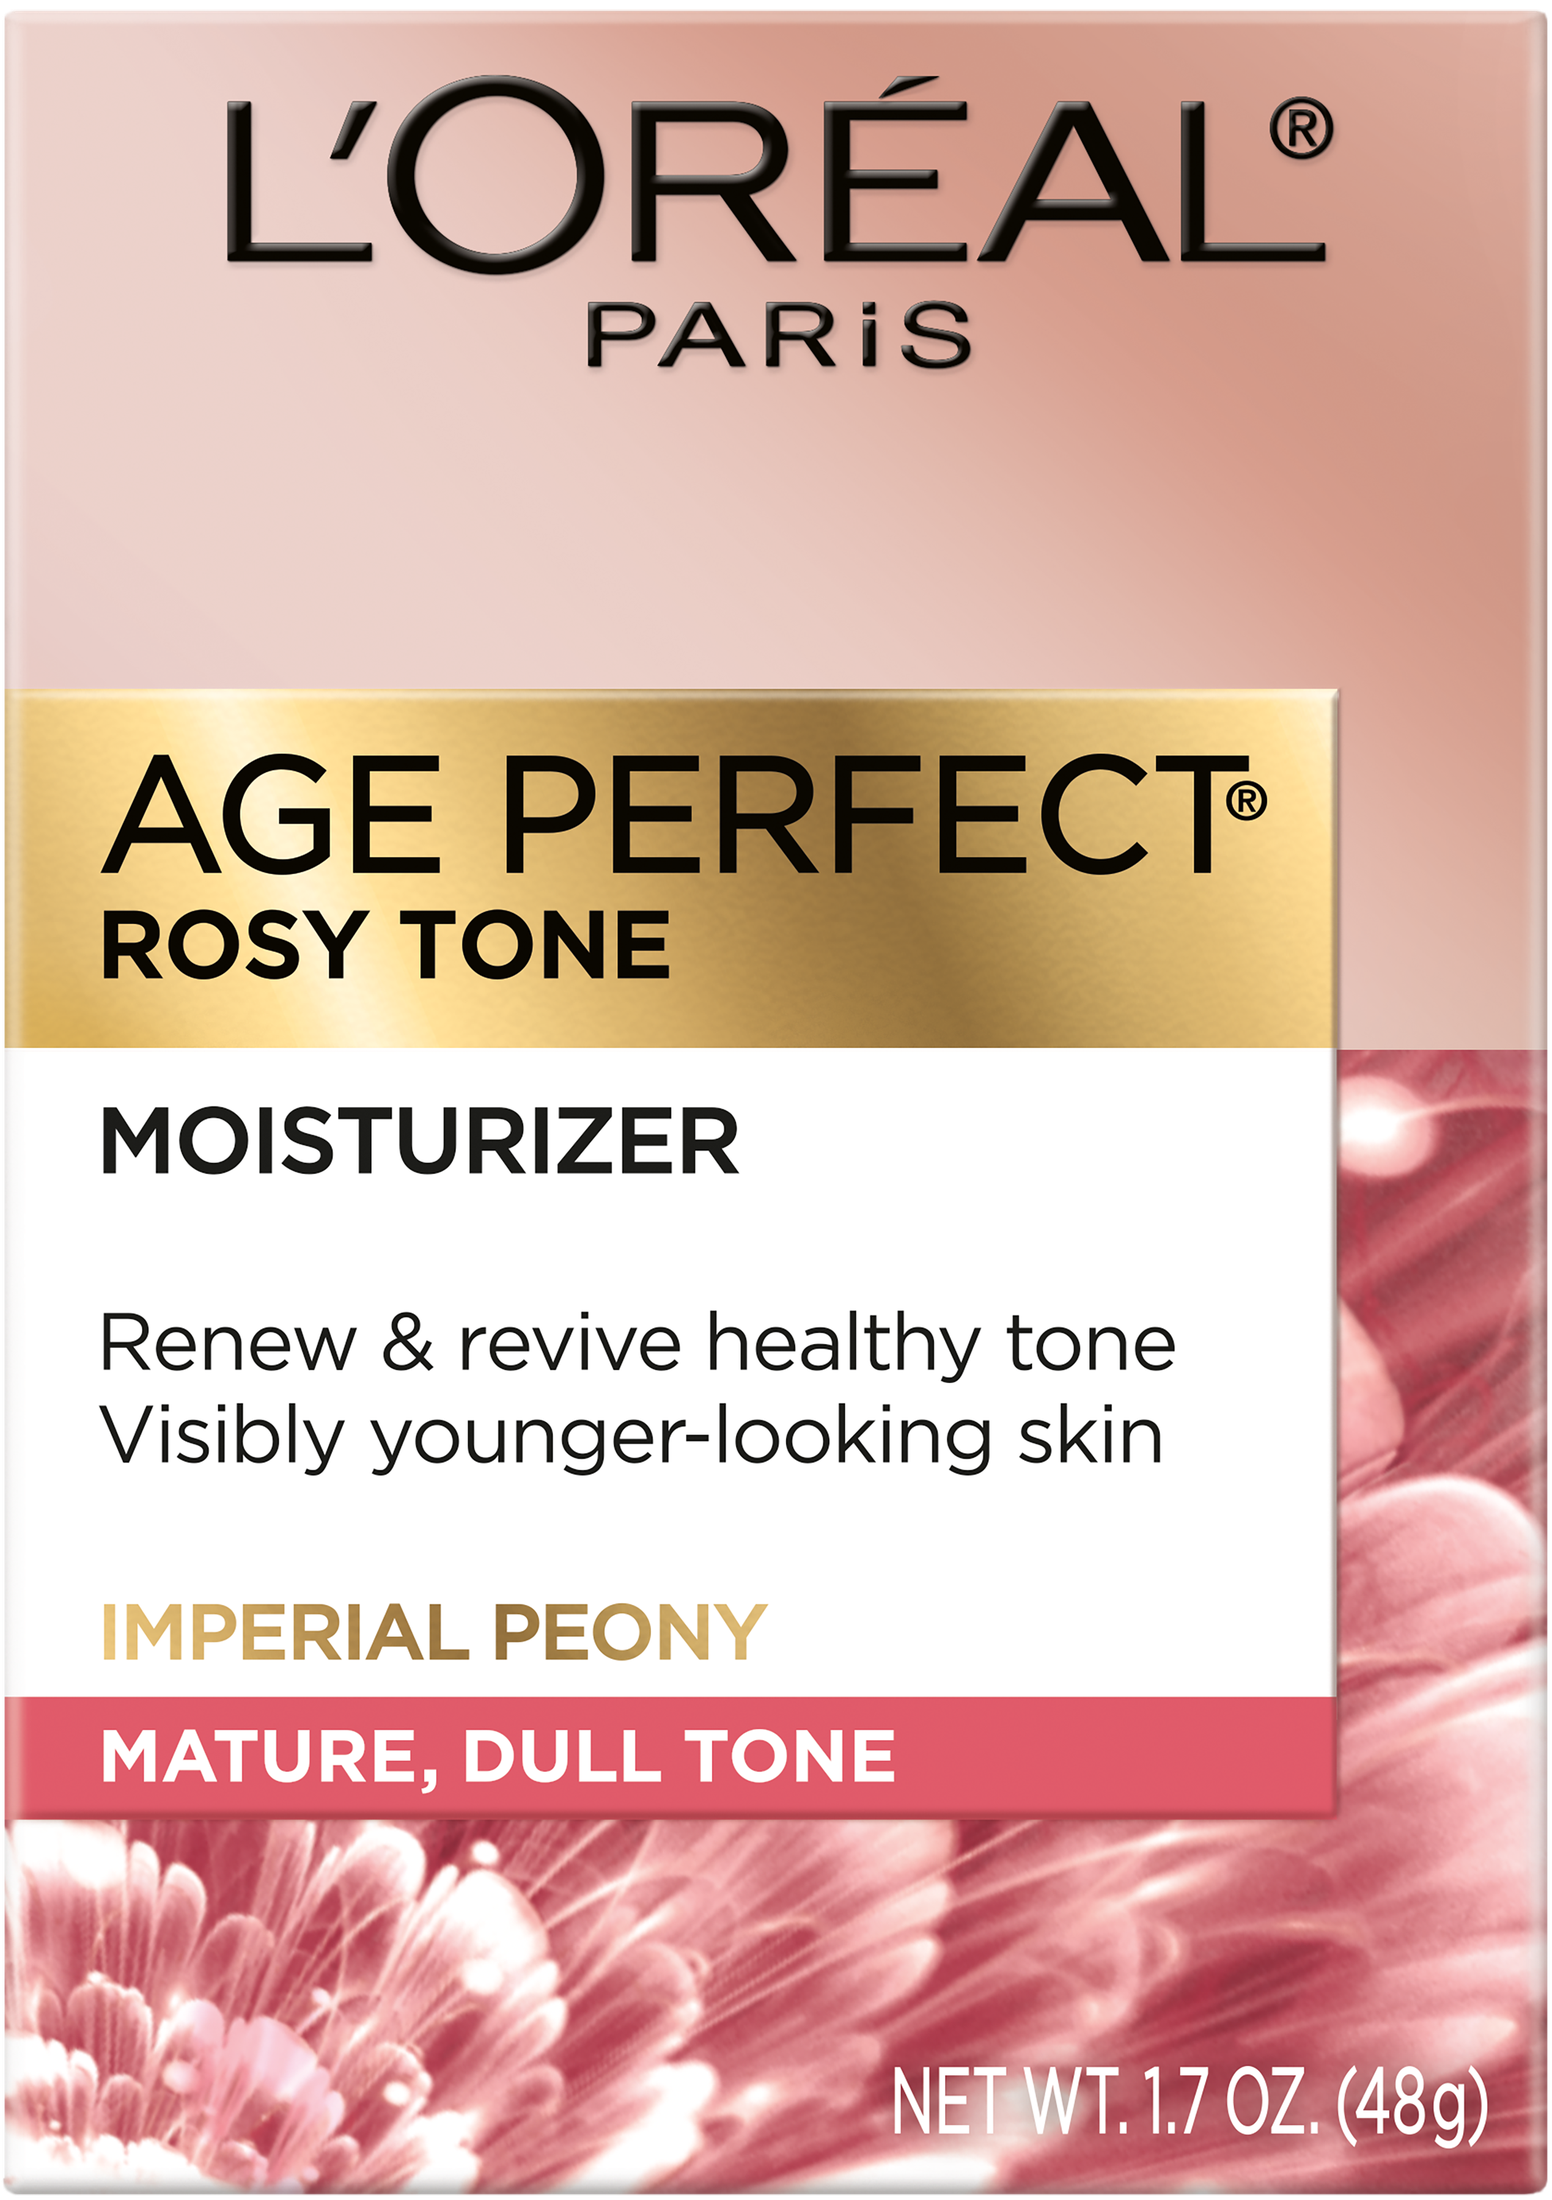 L'Oreal Paris Age Perfect Rosy Tone Face Moisturizer, 1.7 oz - image 3 of 8